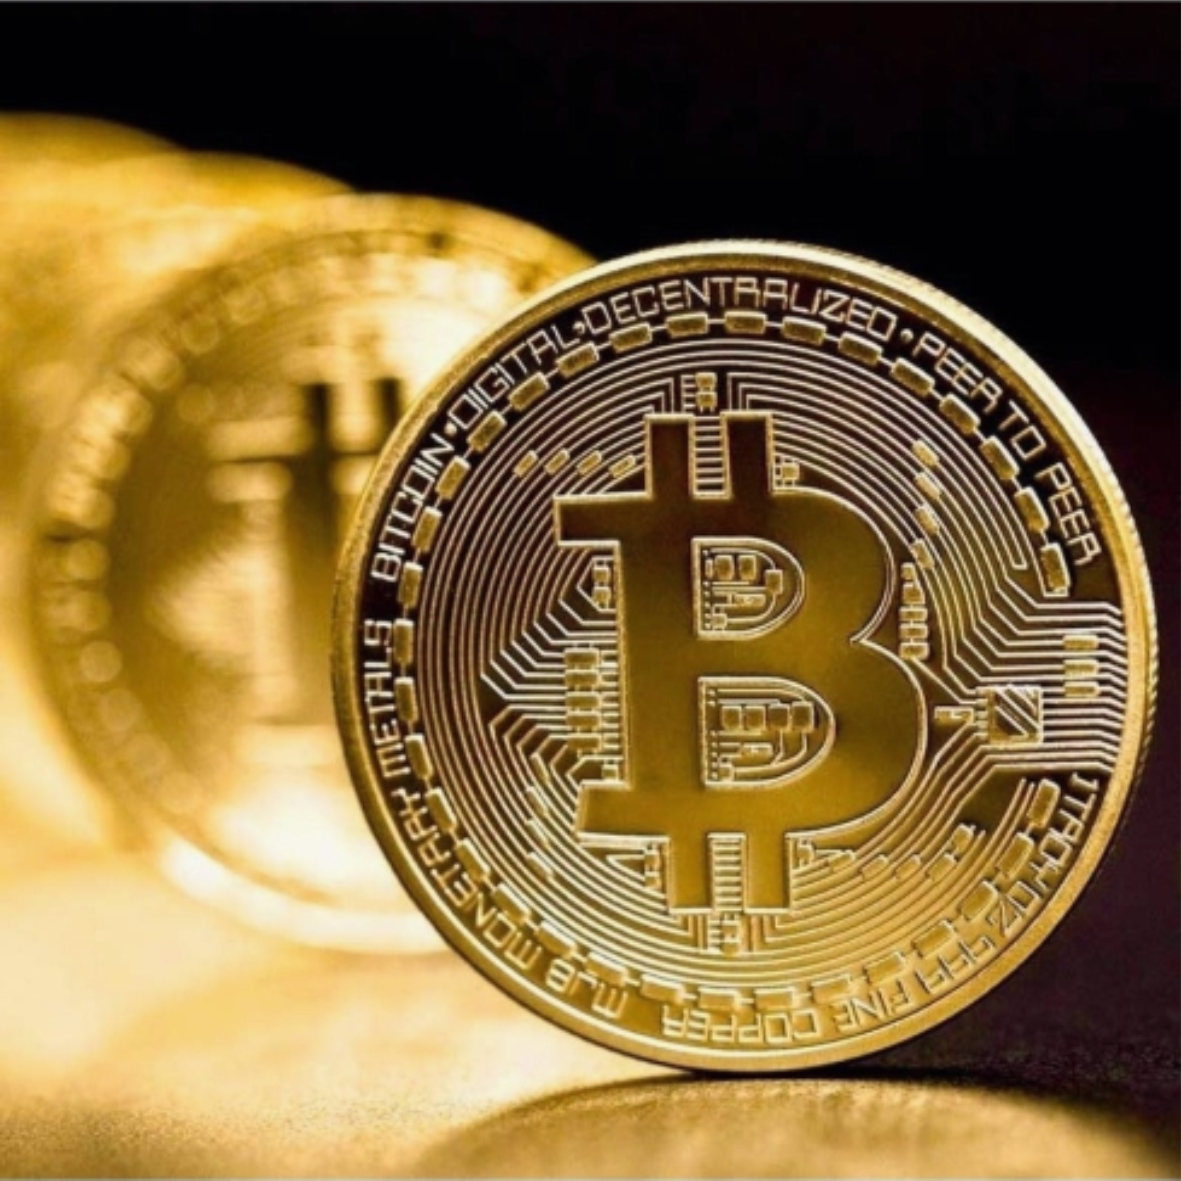 Сувенирная монета "Bitcoin" (Биткойн)